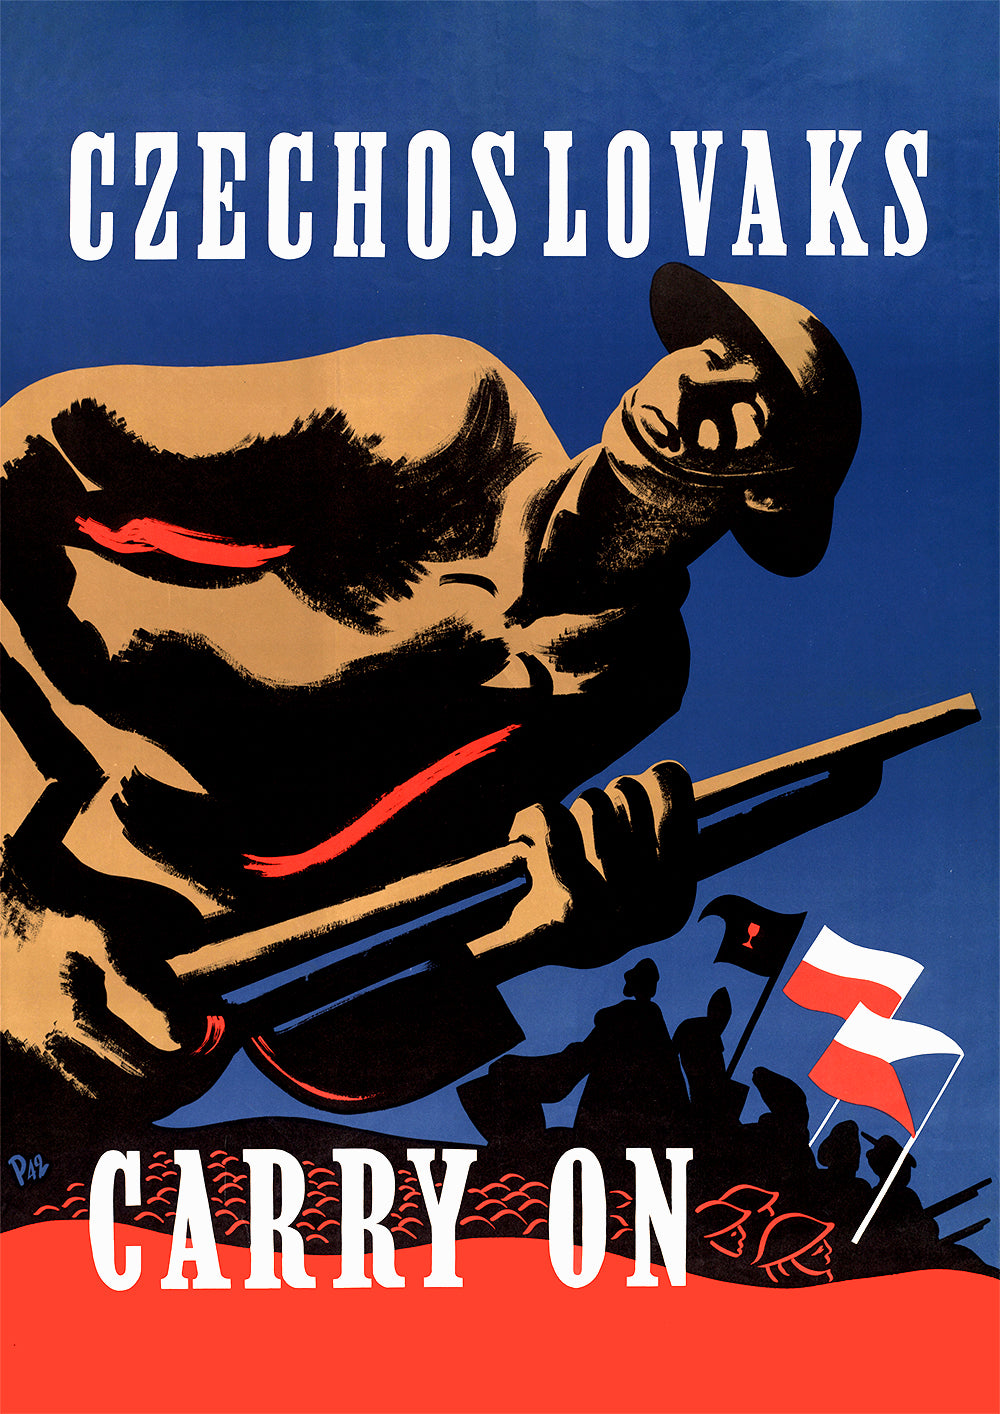 Czechoslovaks carry on — Czechoslovak World War Two poster